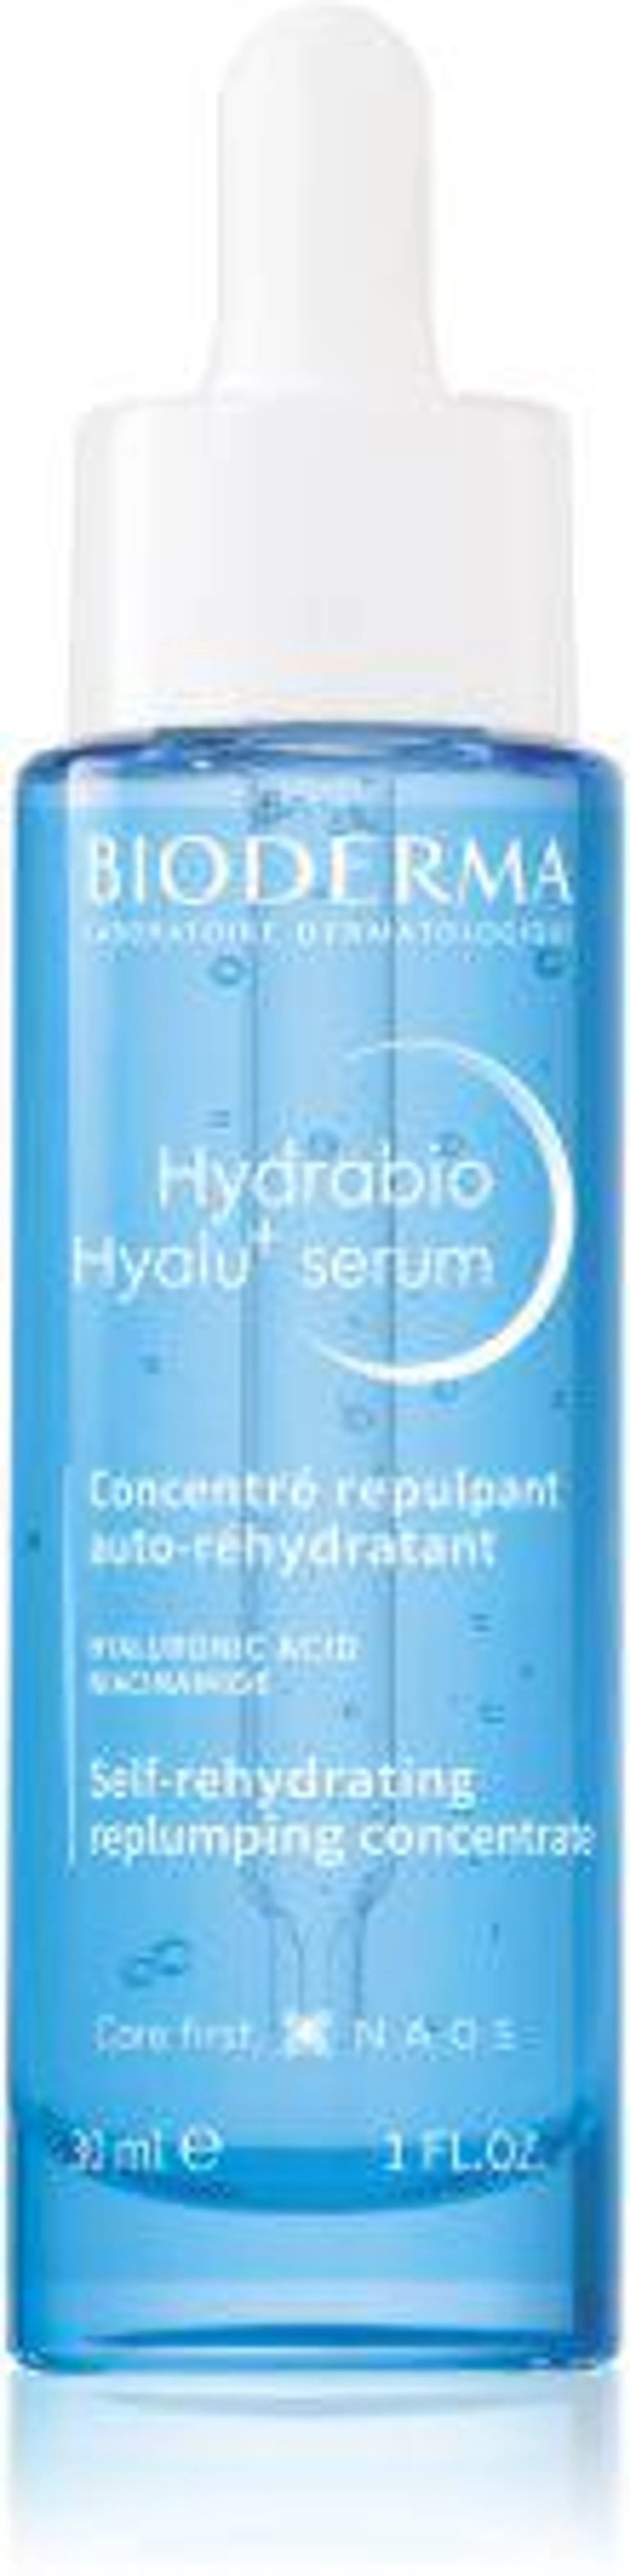 Bioderma Hydrabio Hyalu+ sérum